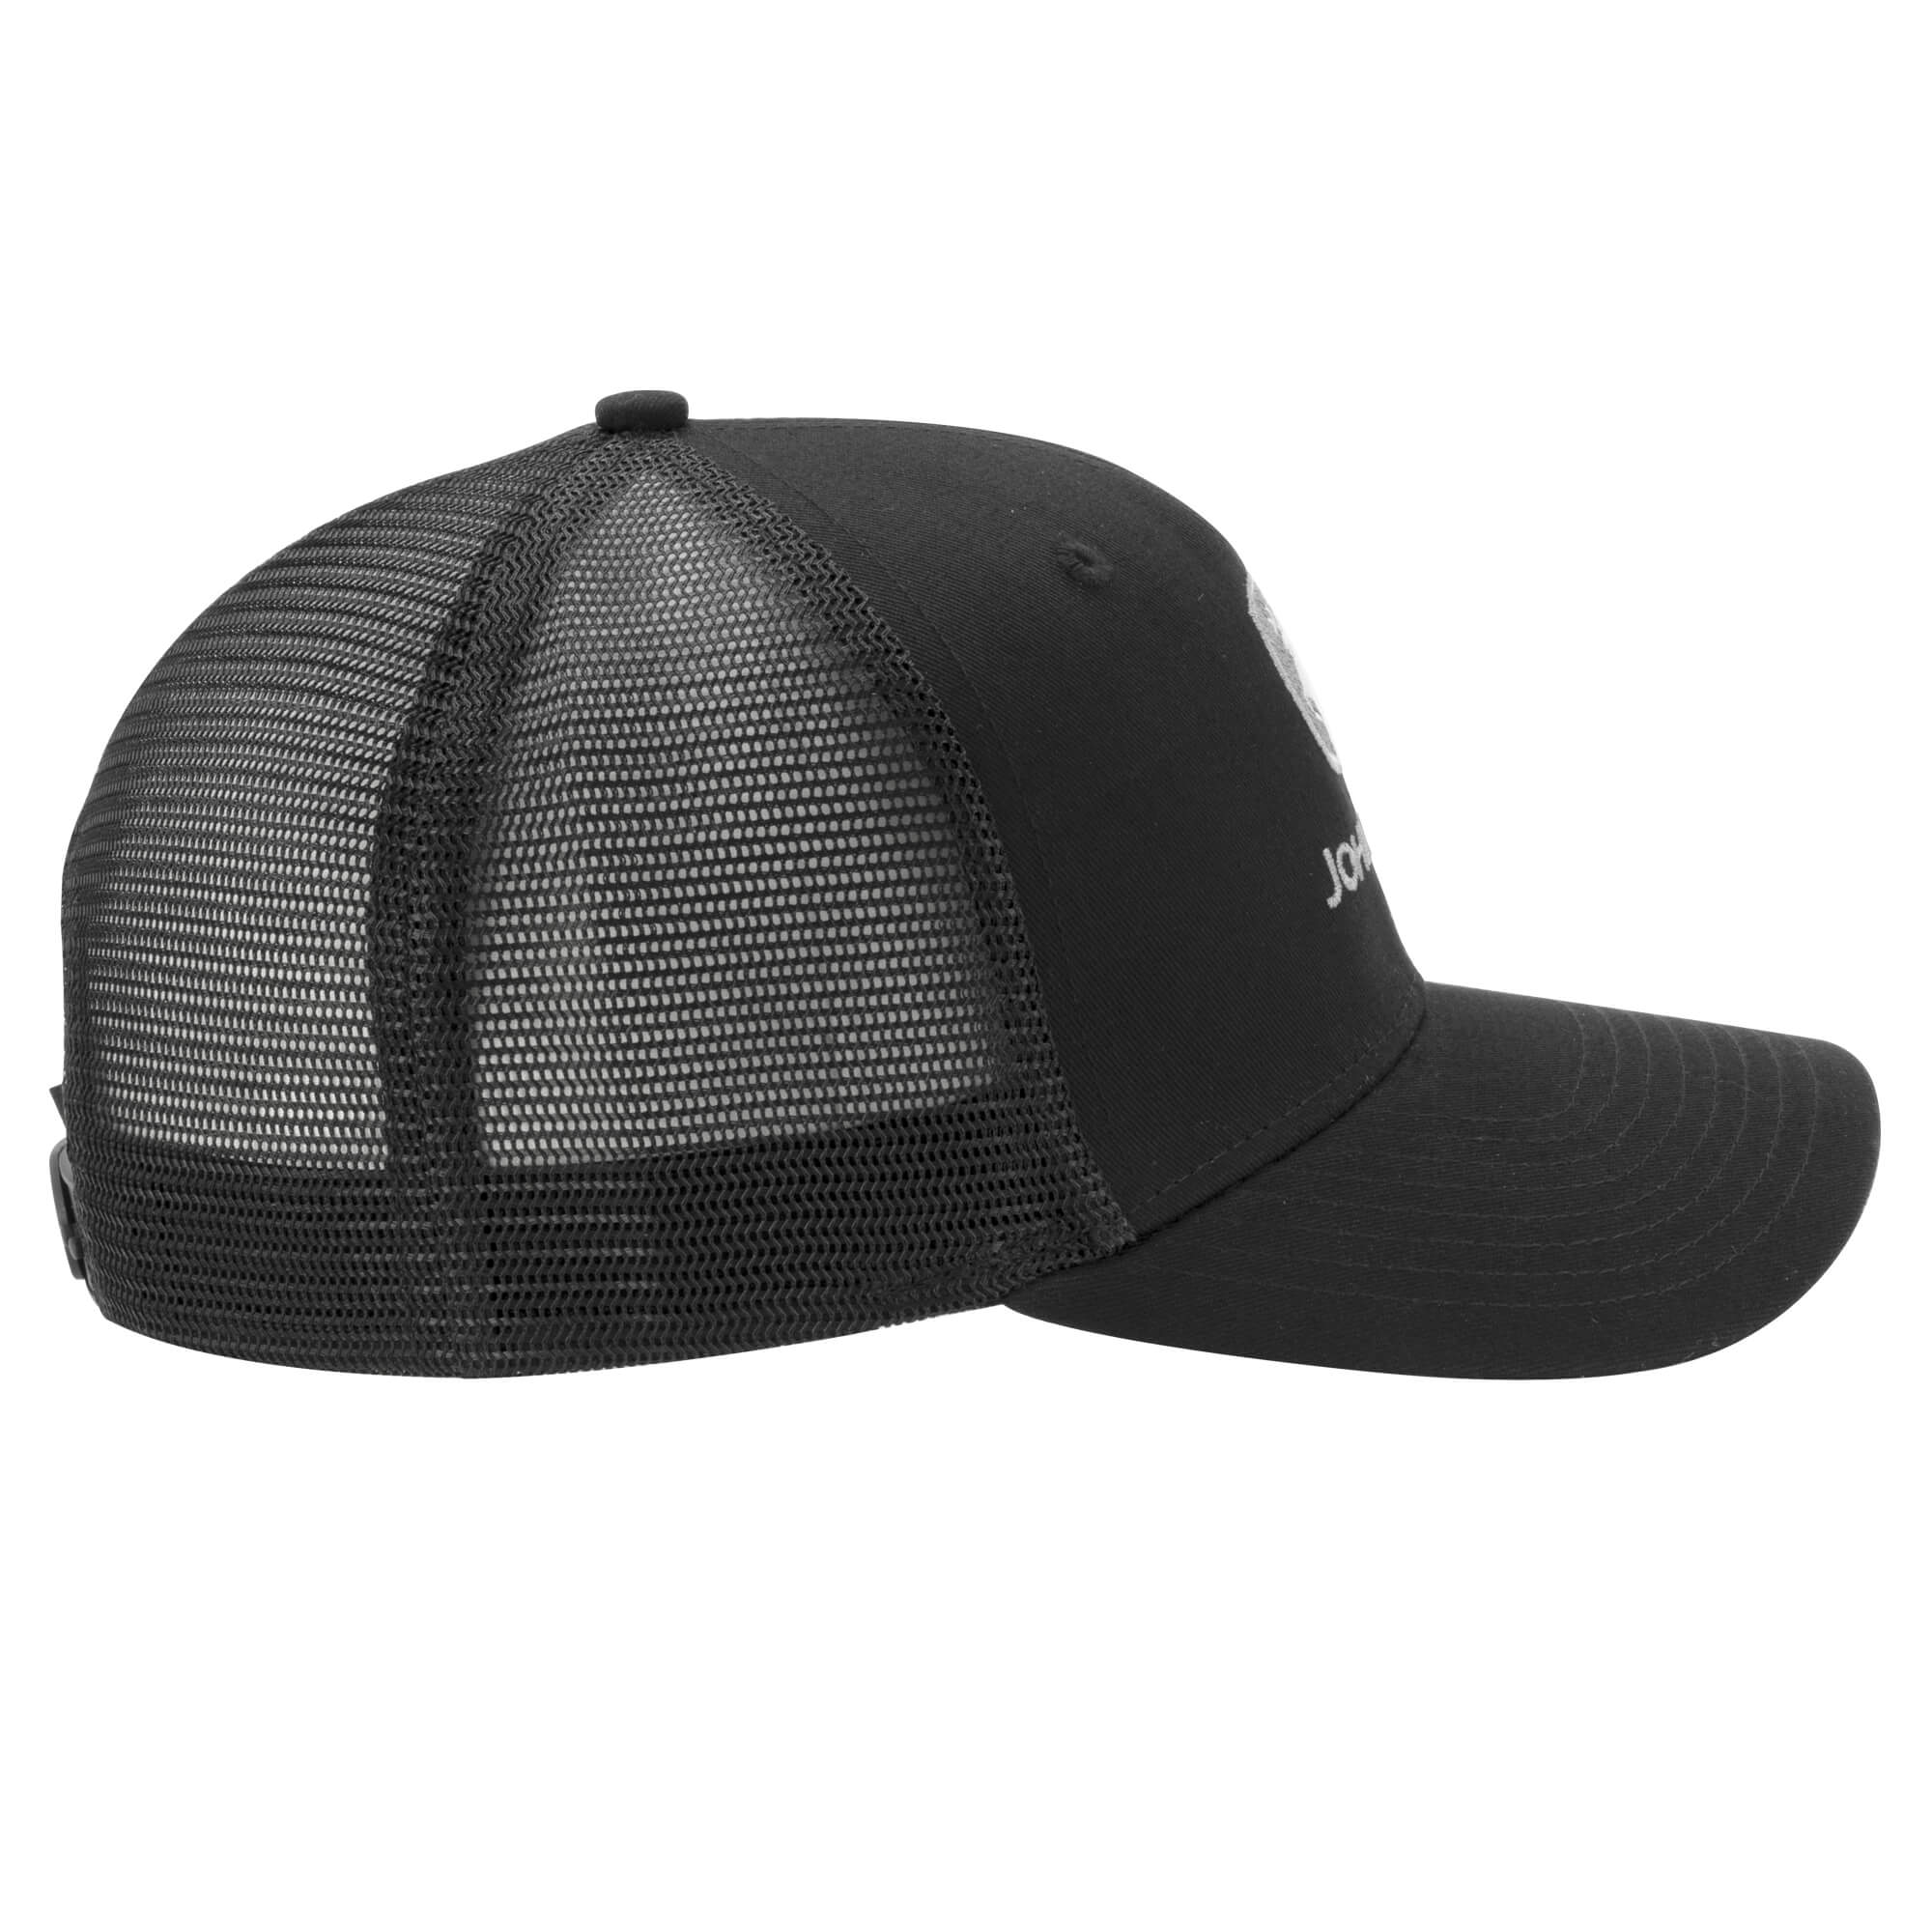 John Deere Twill Trucker Hat Mesh Baseball Cap-Black-Os